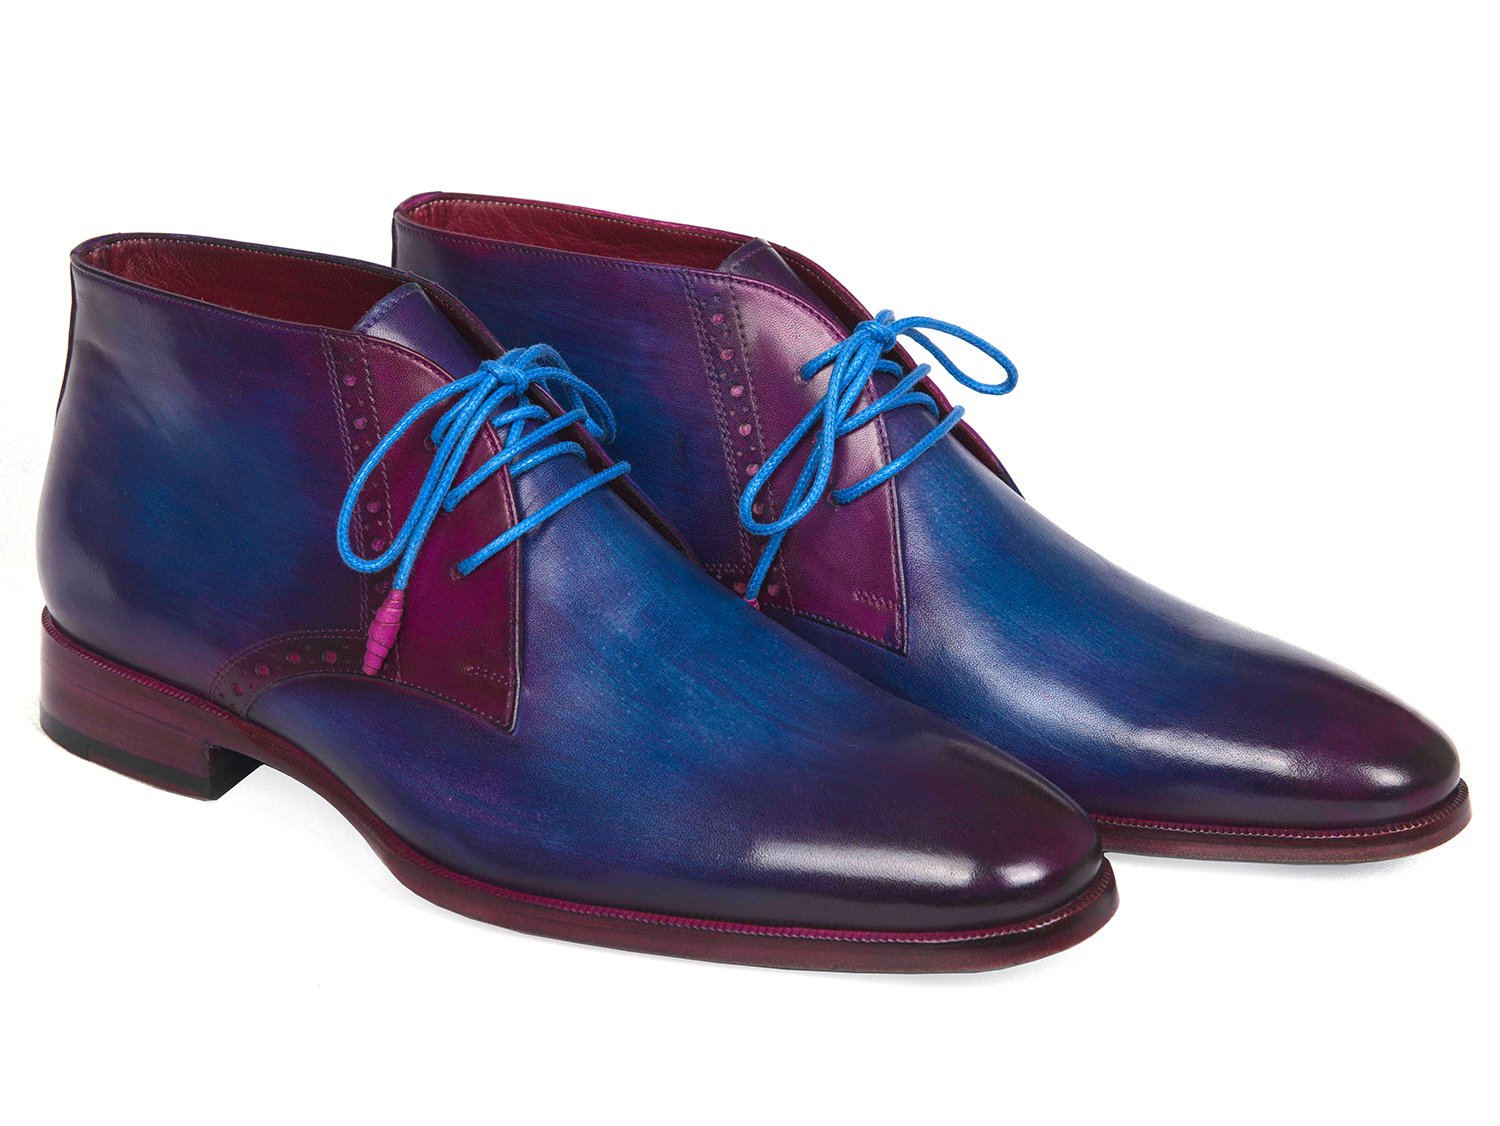 Paul Parkman "CK55U7" Blue / Purple Chukka Boots.